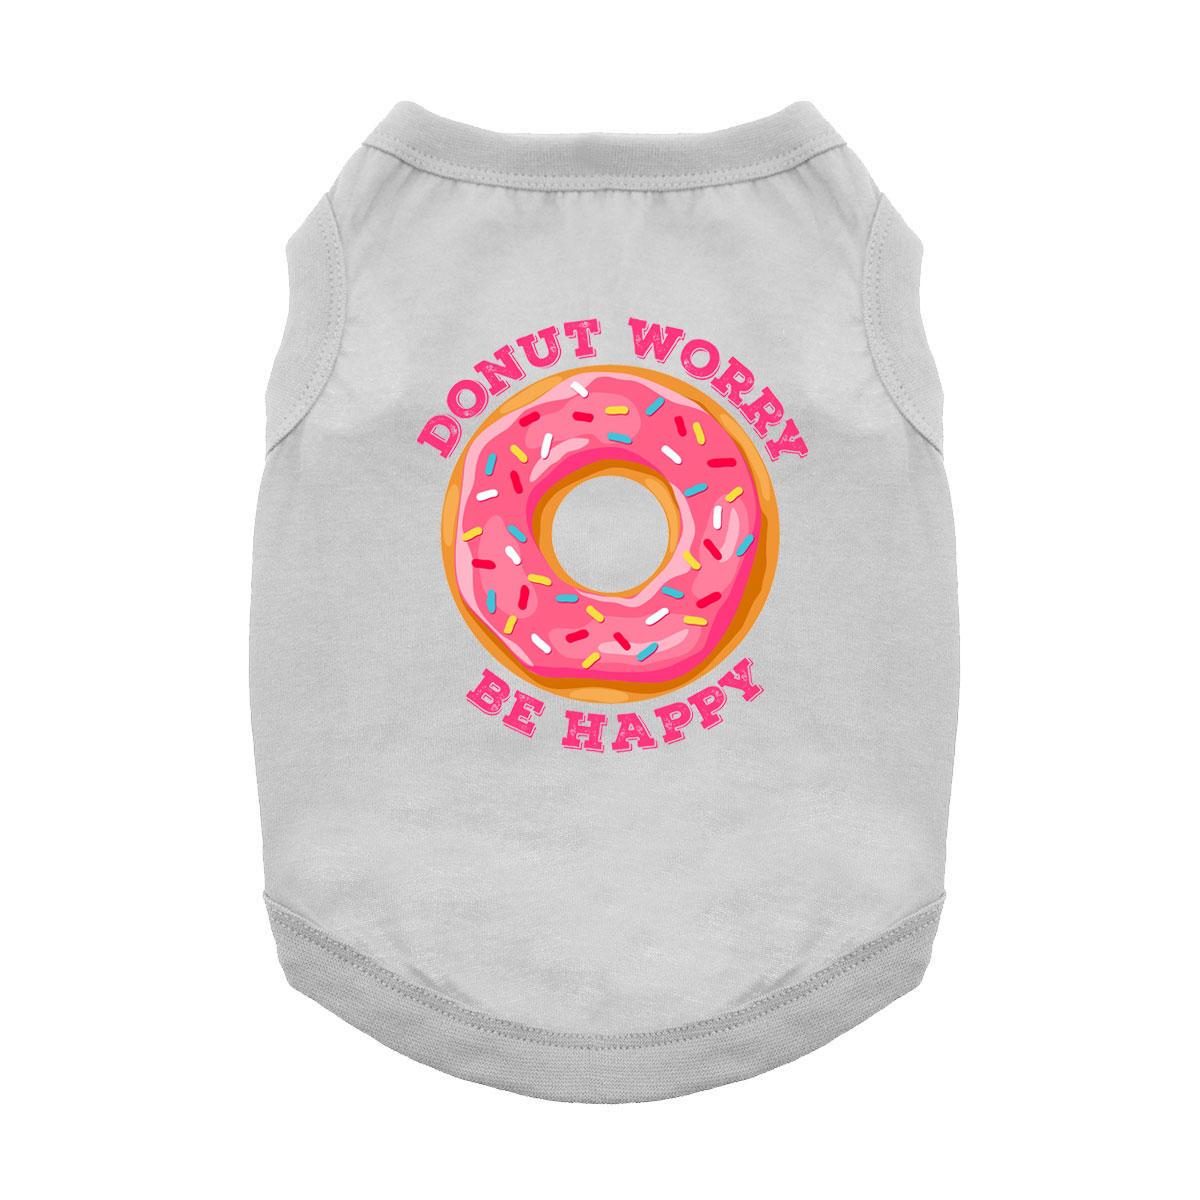 Donut Worry Be Happy  Dog Shirt - Gray